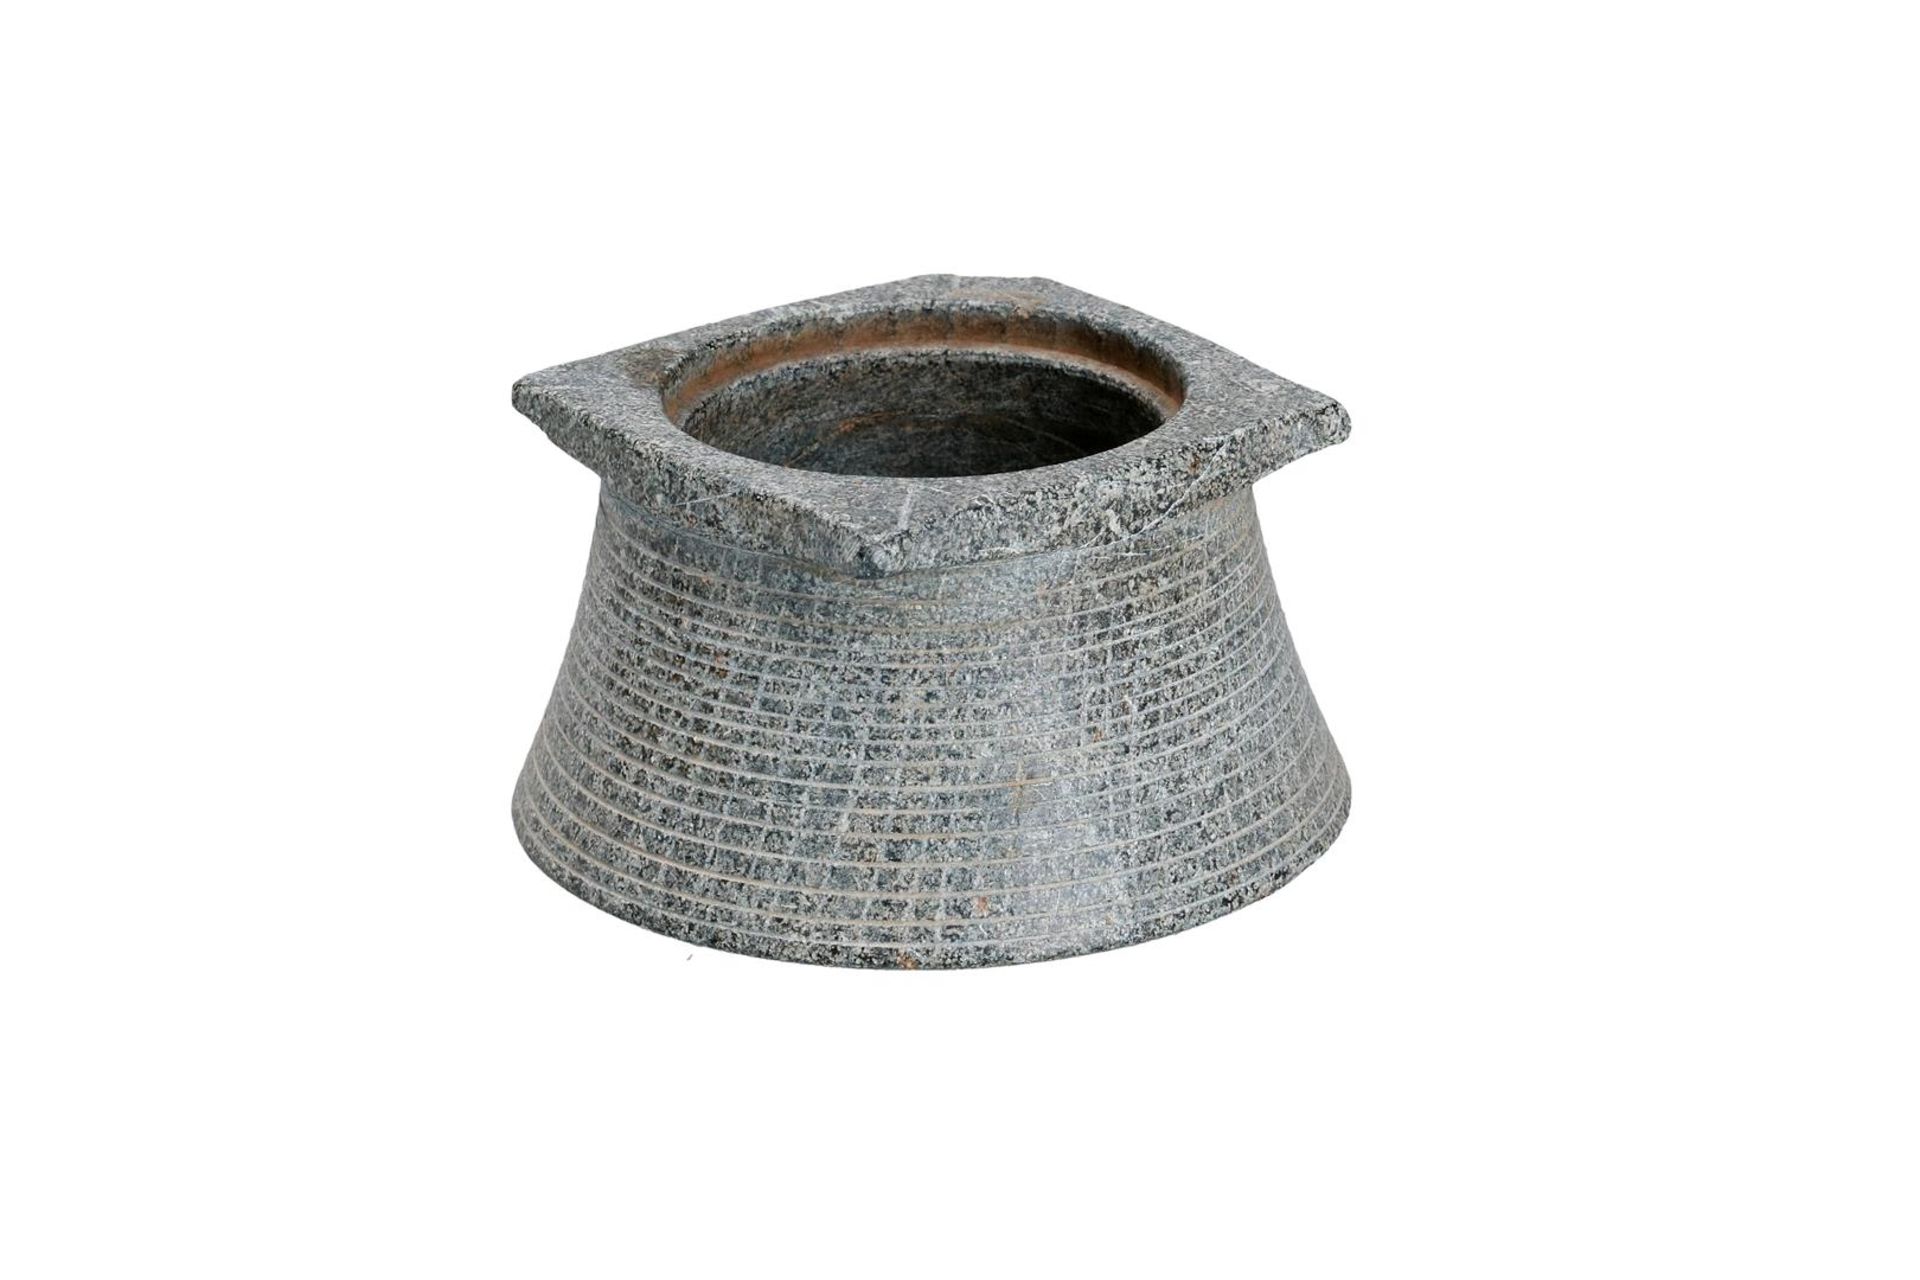 A Bactrian stone vessel. Approx. 2000 B.C. Provenance: De Backker Fine Art. Gabriëlse Collection, M